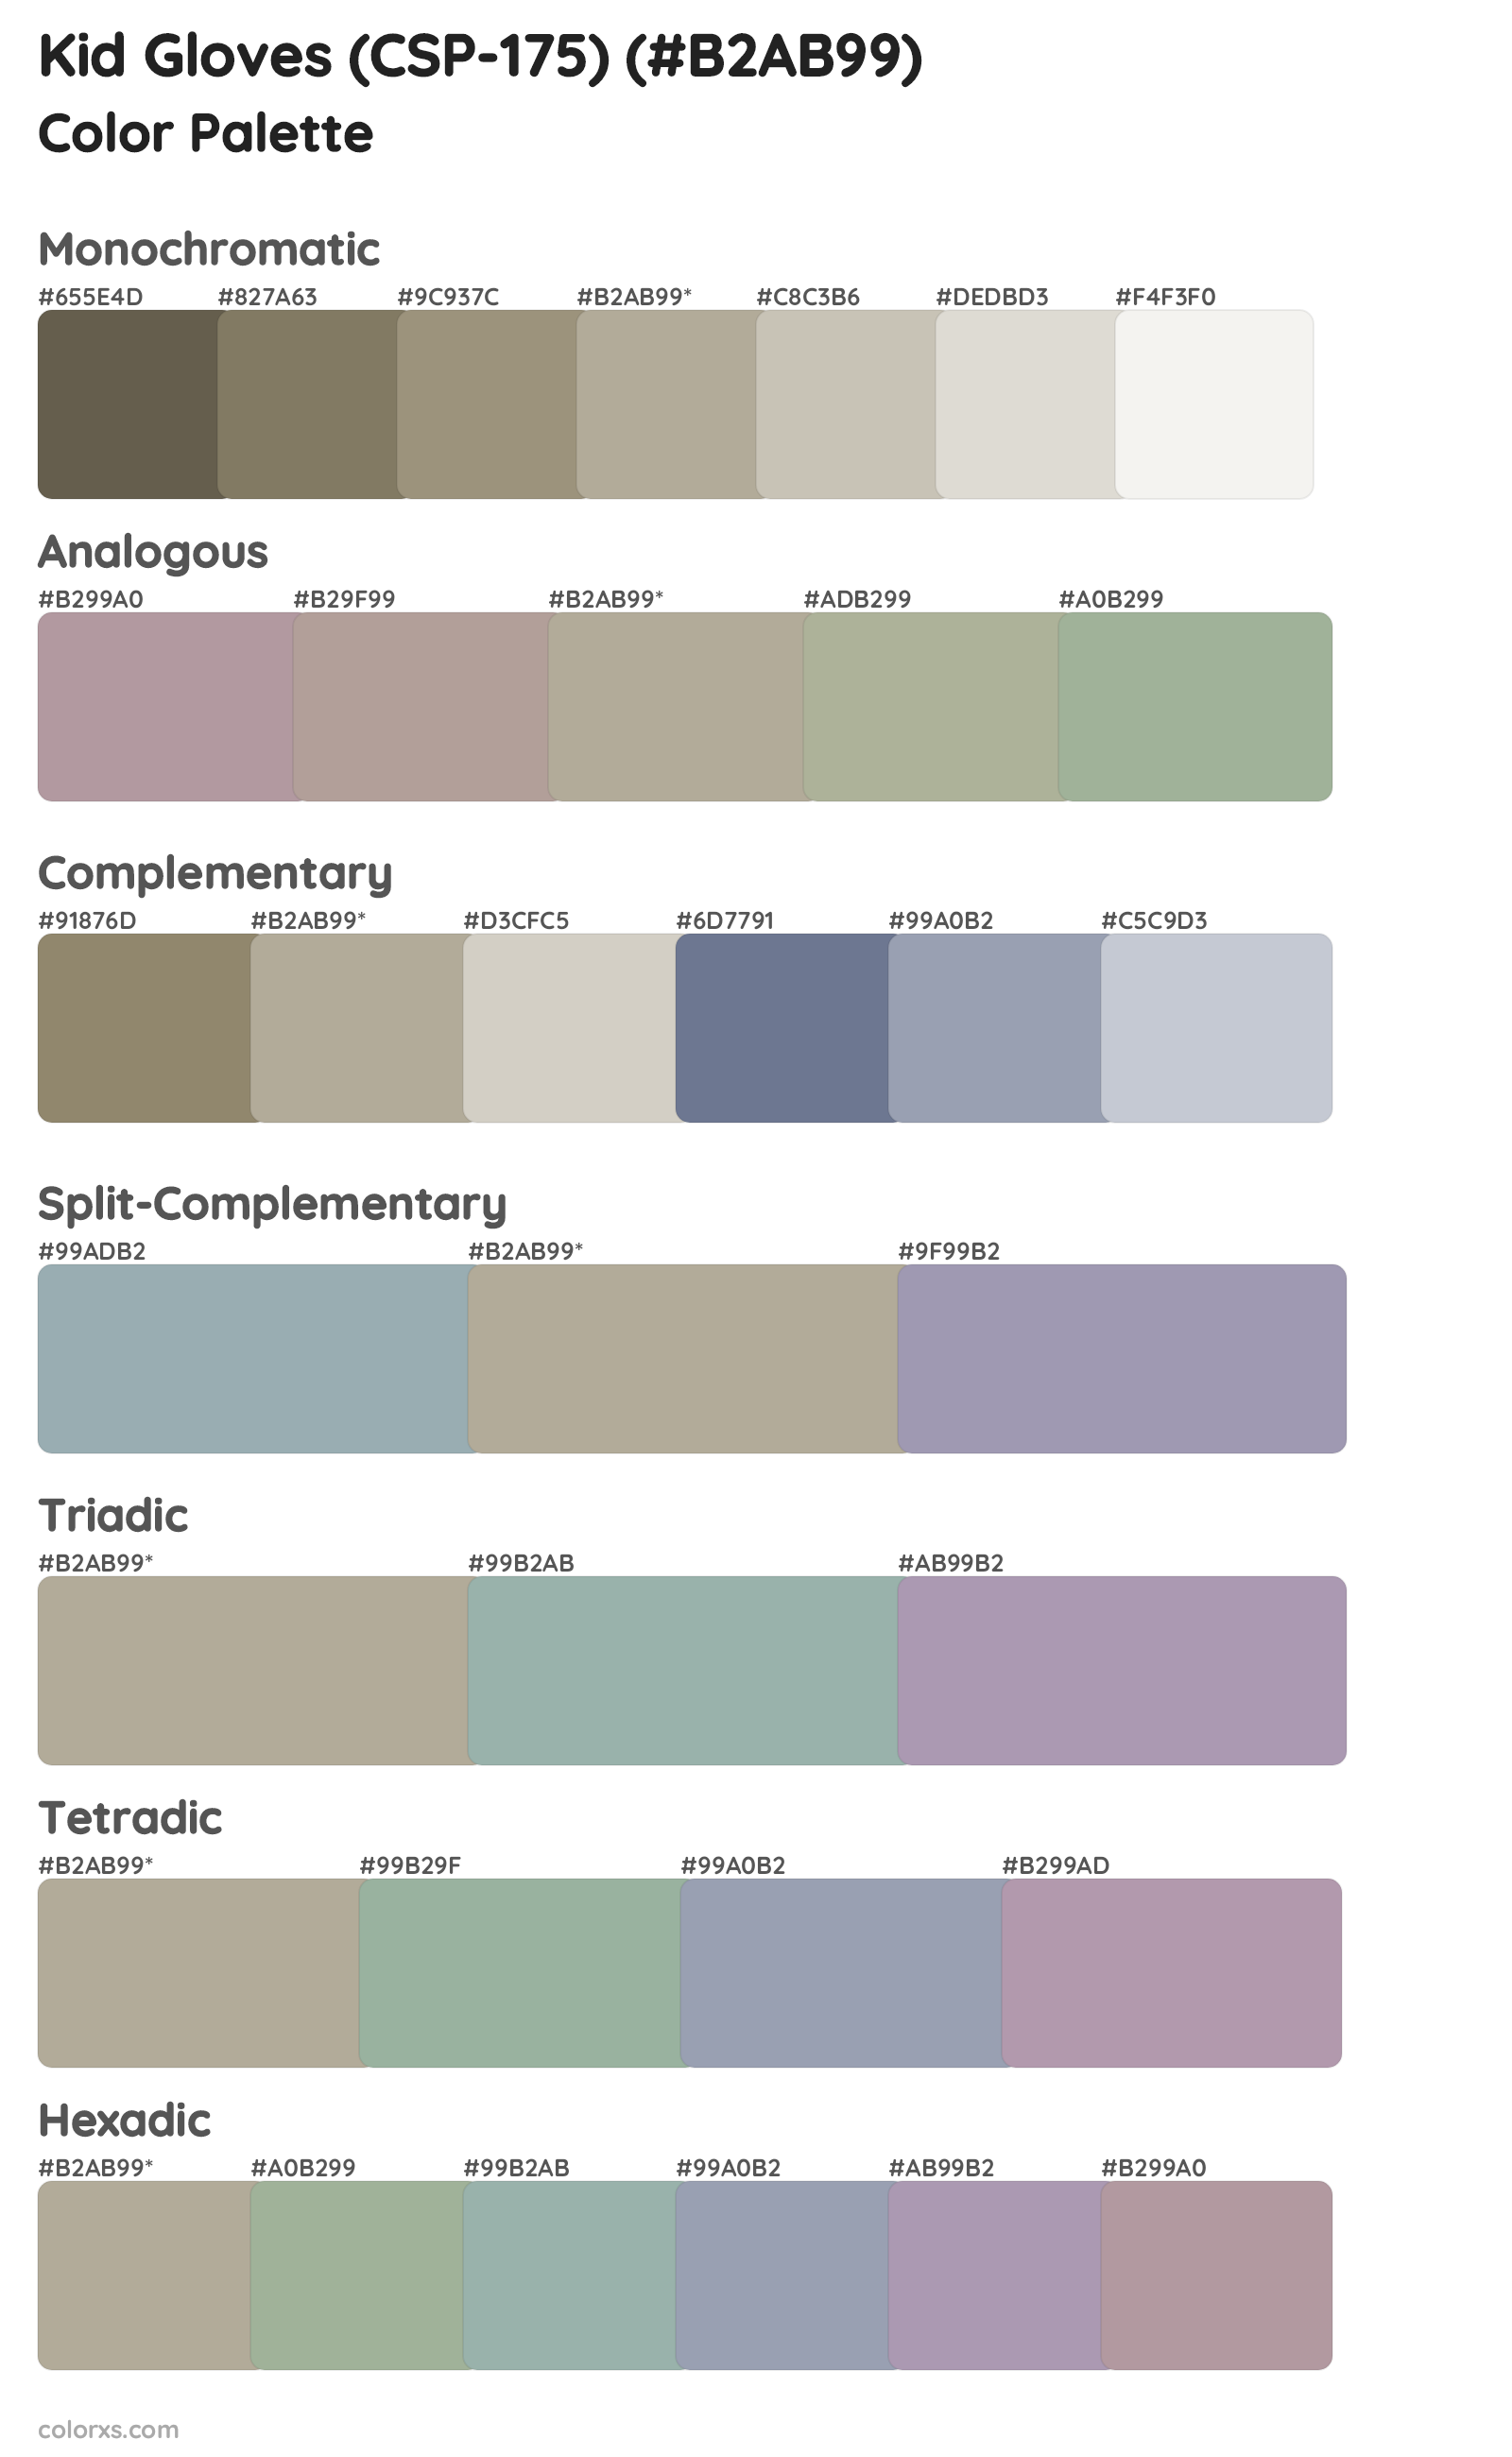 Kid Gloves (CSP-175) Color Scheme Palettes